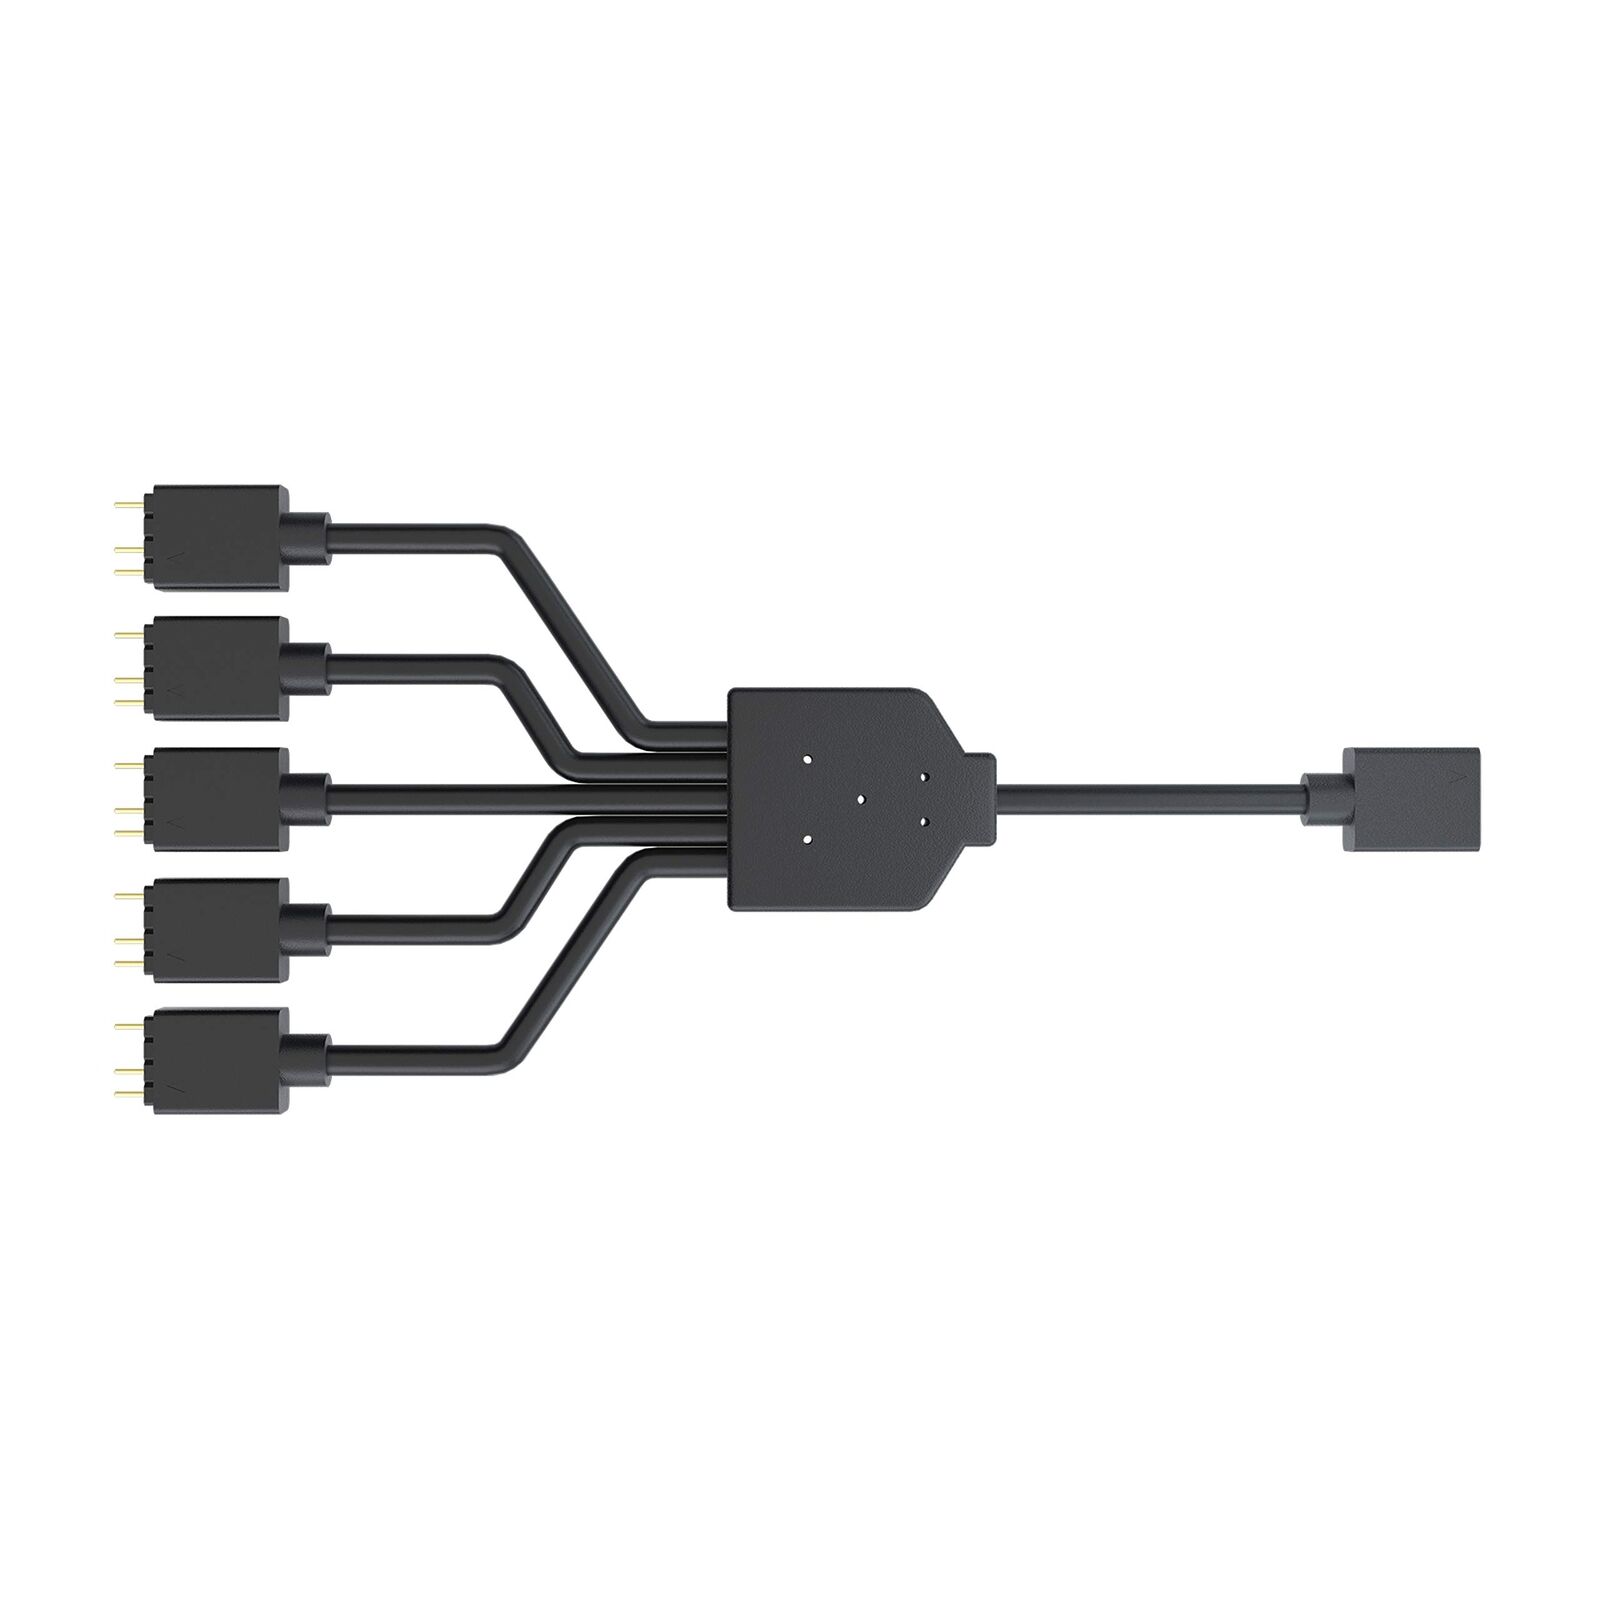 ARGB 1-to-5 Splitter Cable, 3-Pin LED Connector, 58 cm, MFX-AWHN-1NNN5-R1